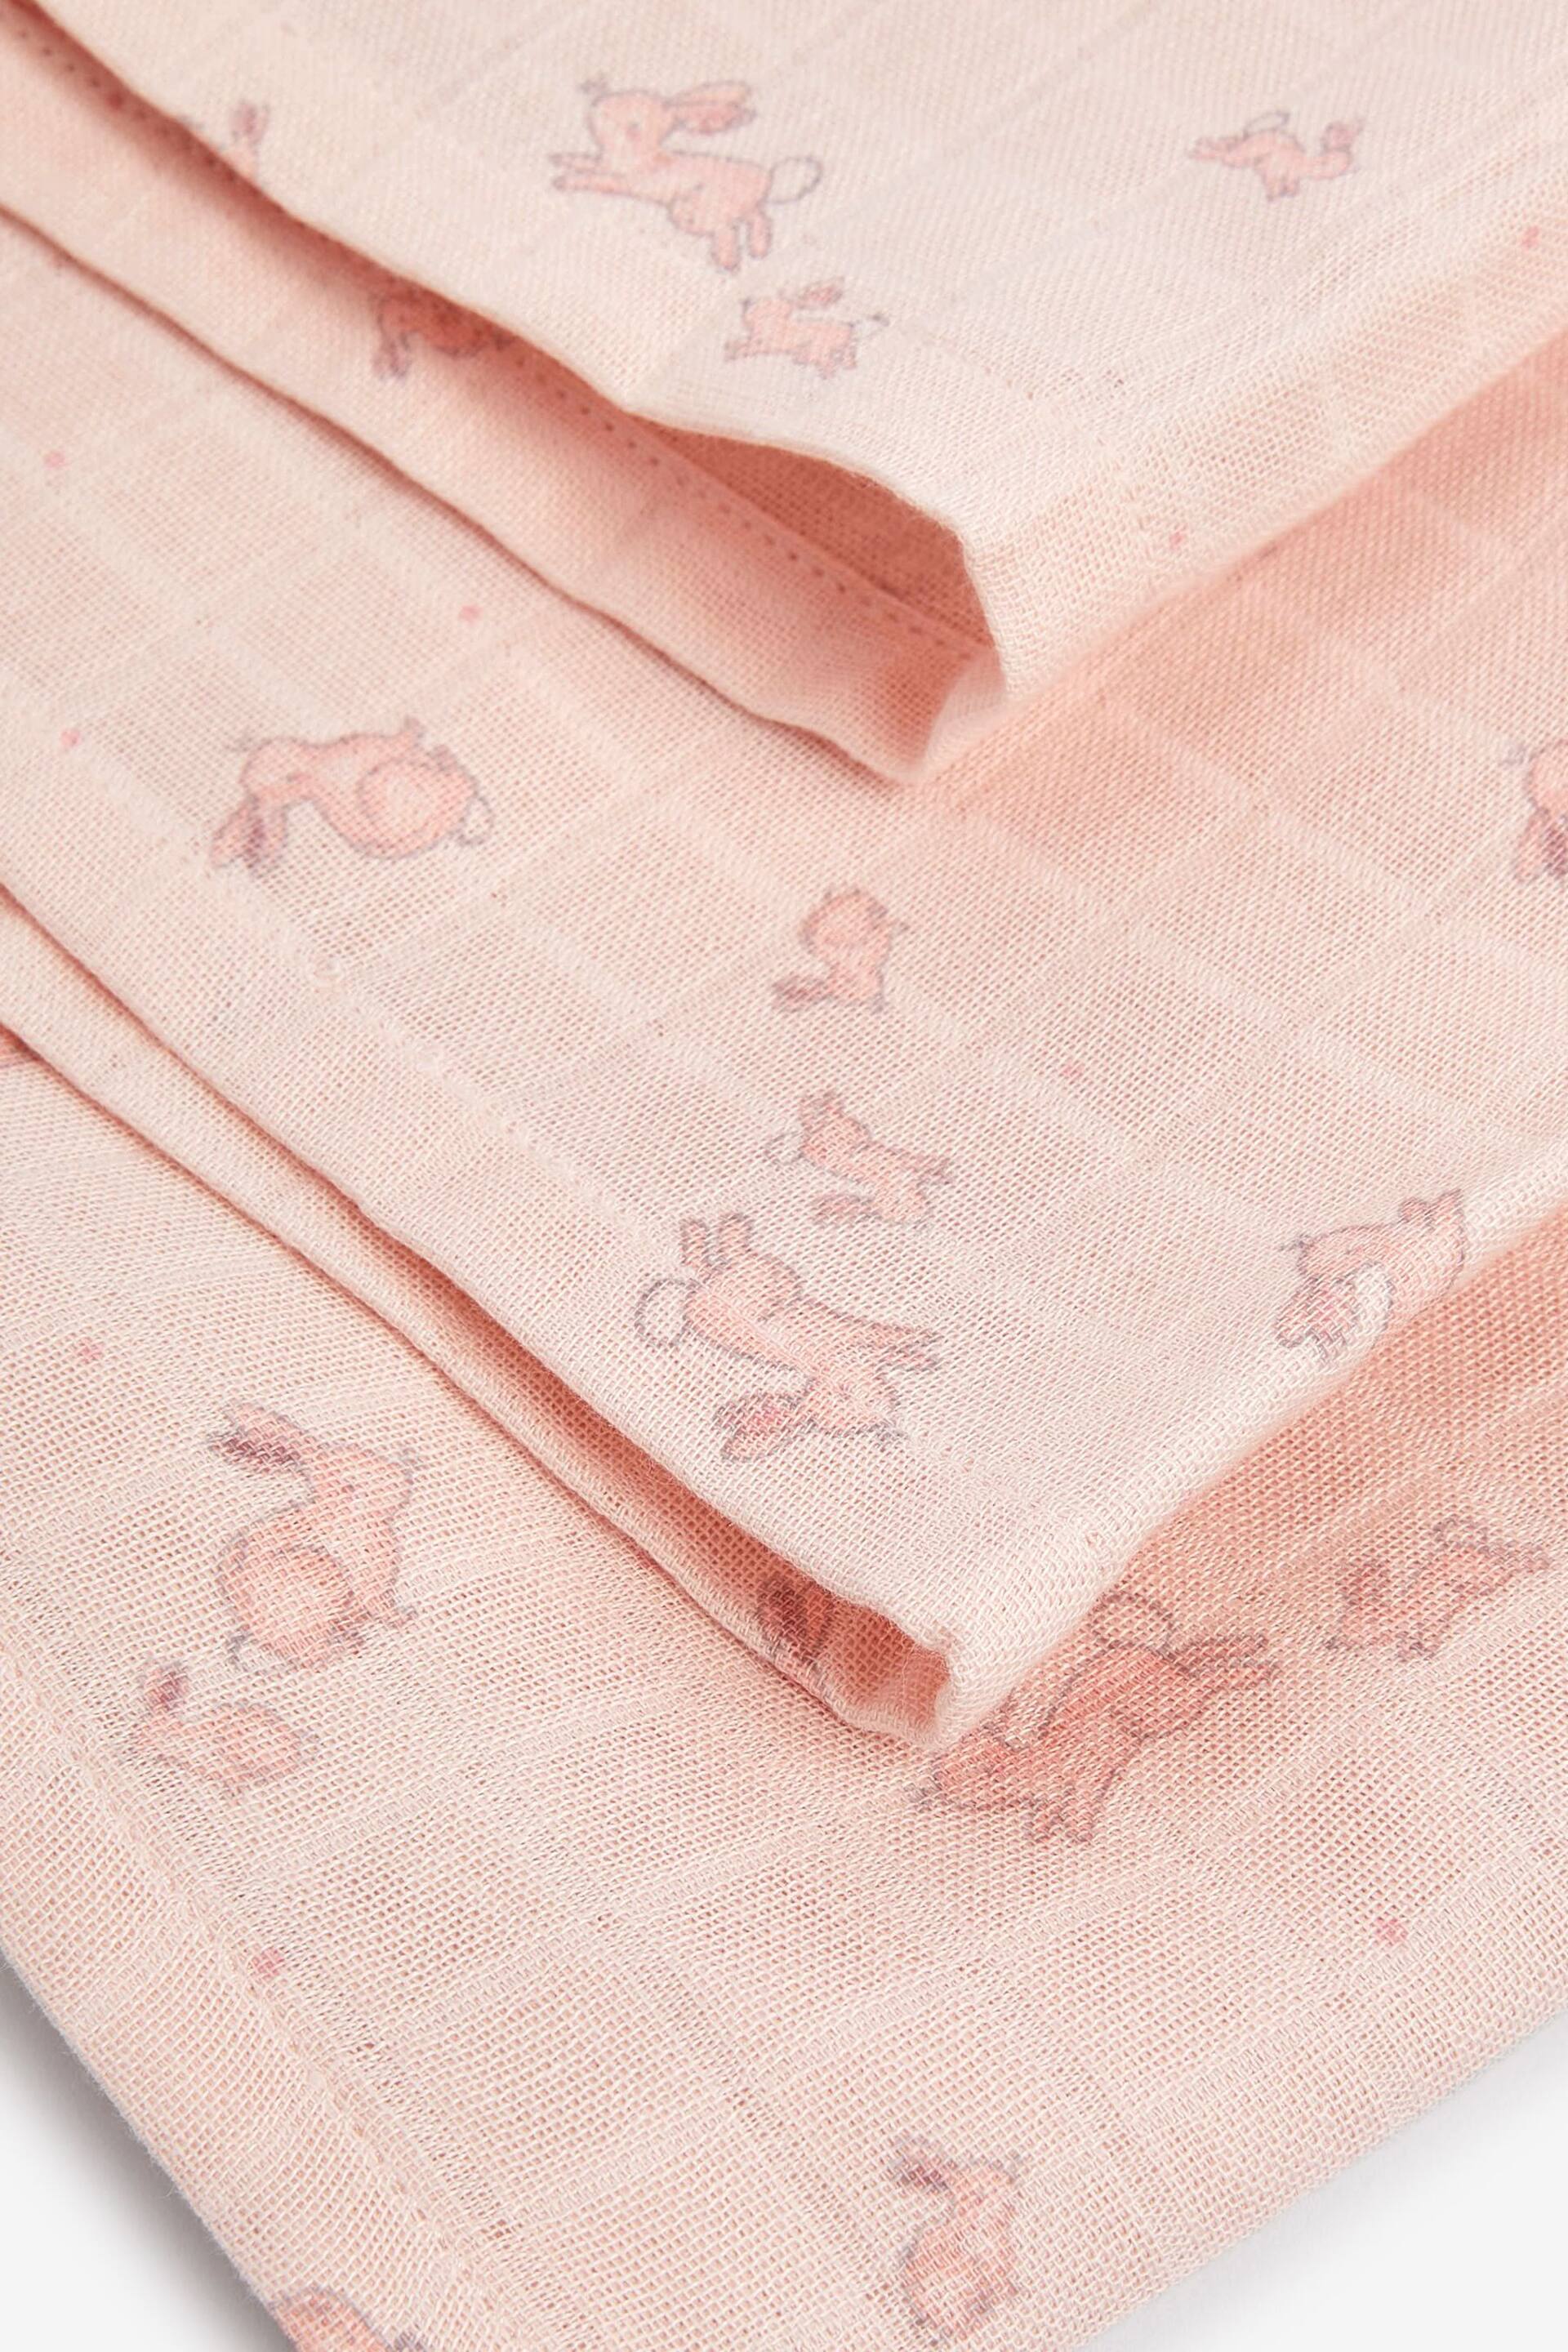 Pink Rabbit Baby Muslin Cloths 4 Packs - Image 6 of 6